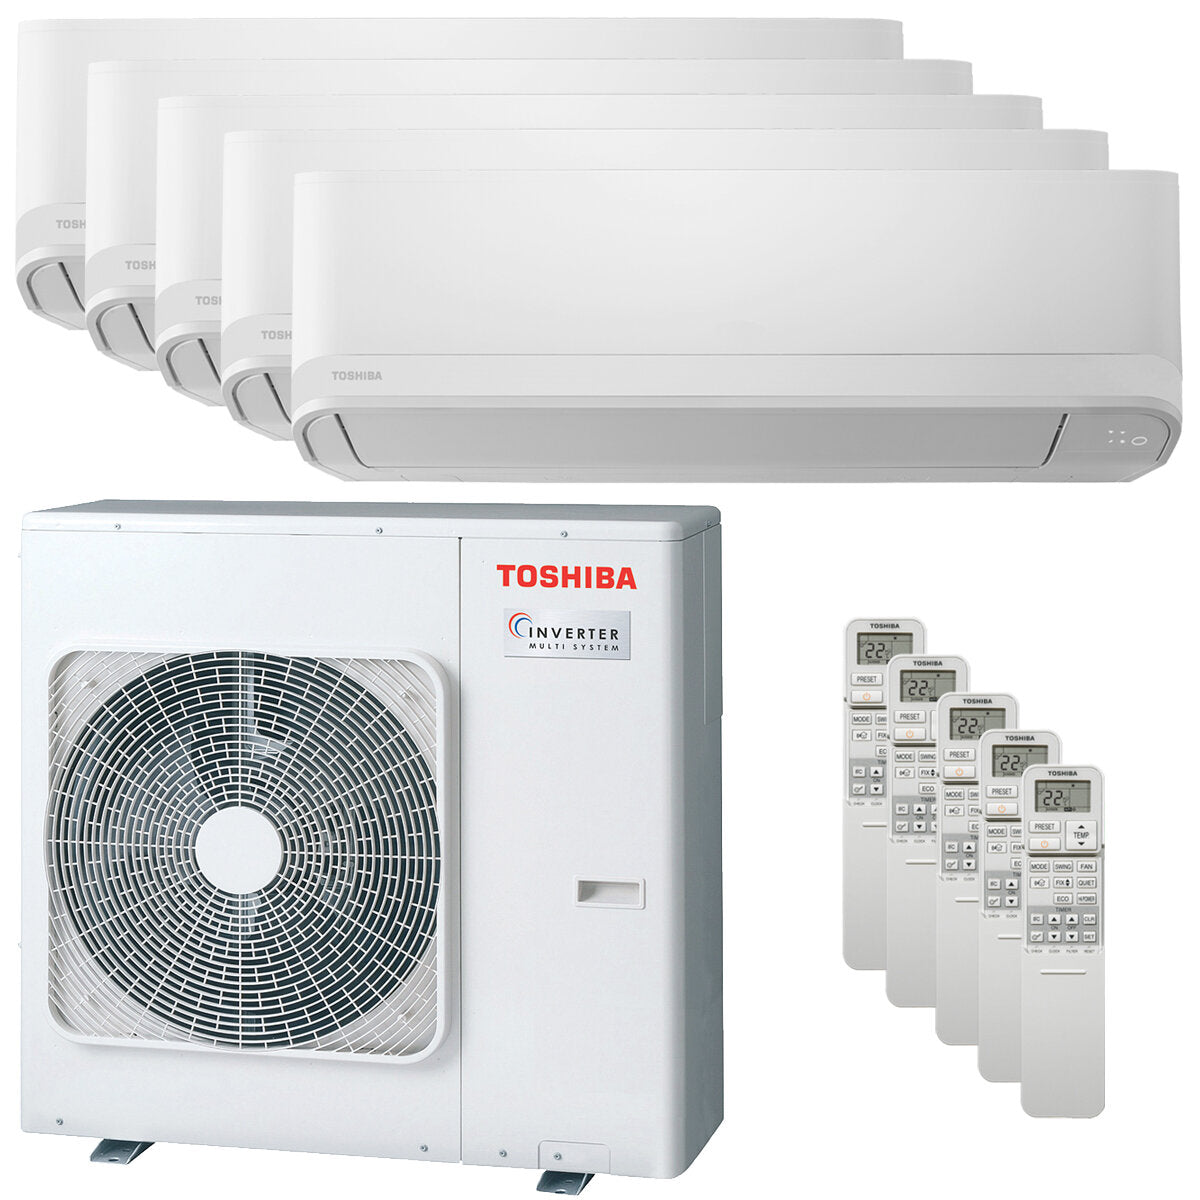 Toshiba NOUVEAU SEIYA climatiseur penta split 7000 + 7000 + 7000 + 9000 + 9000 BTU onduleur A ++ unité extérieure 10,0 kW